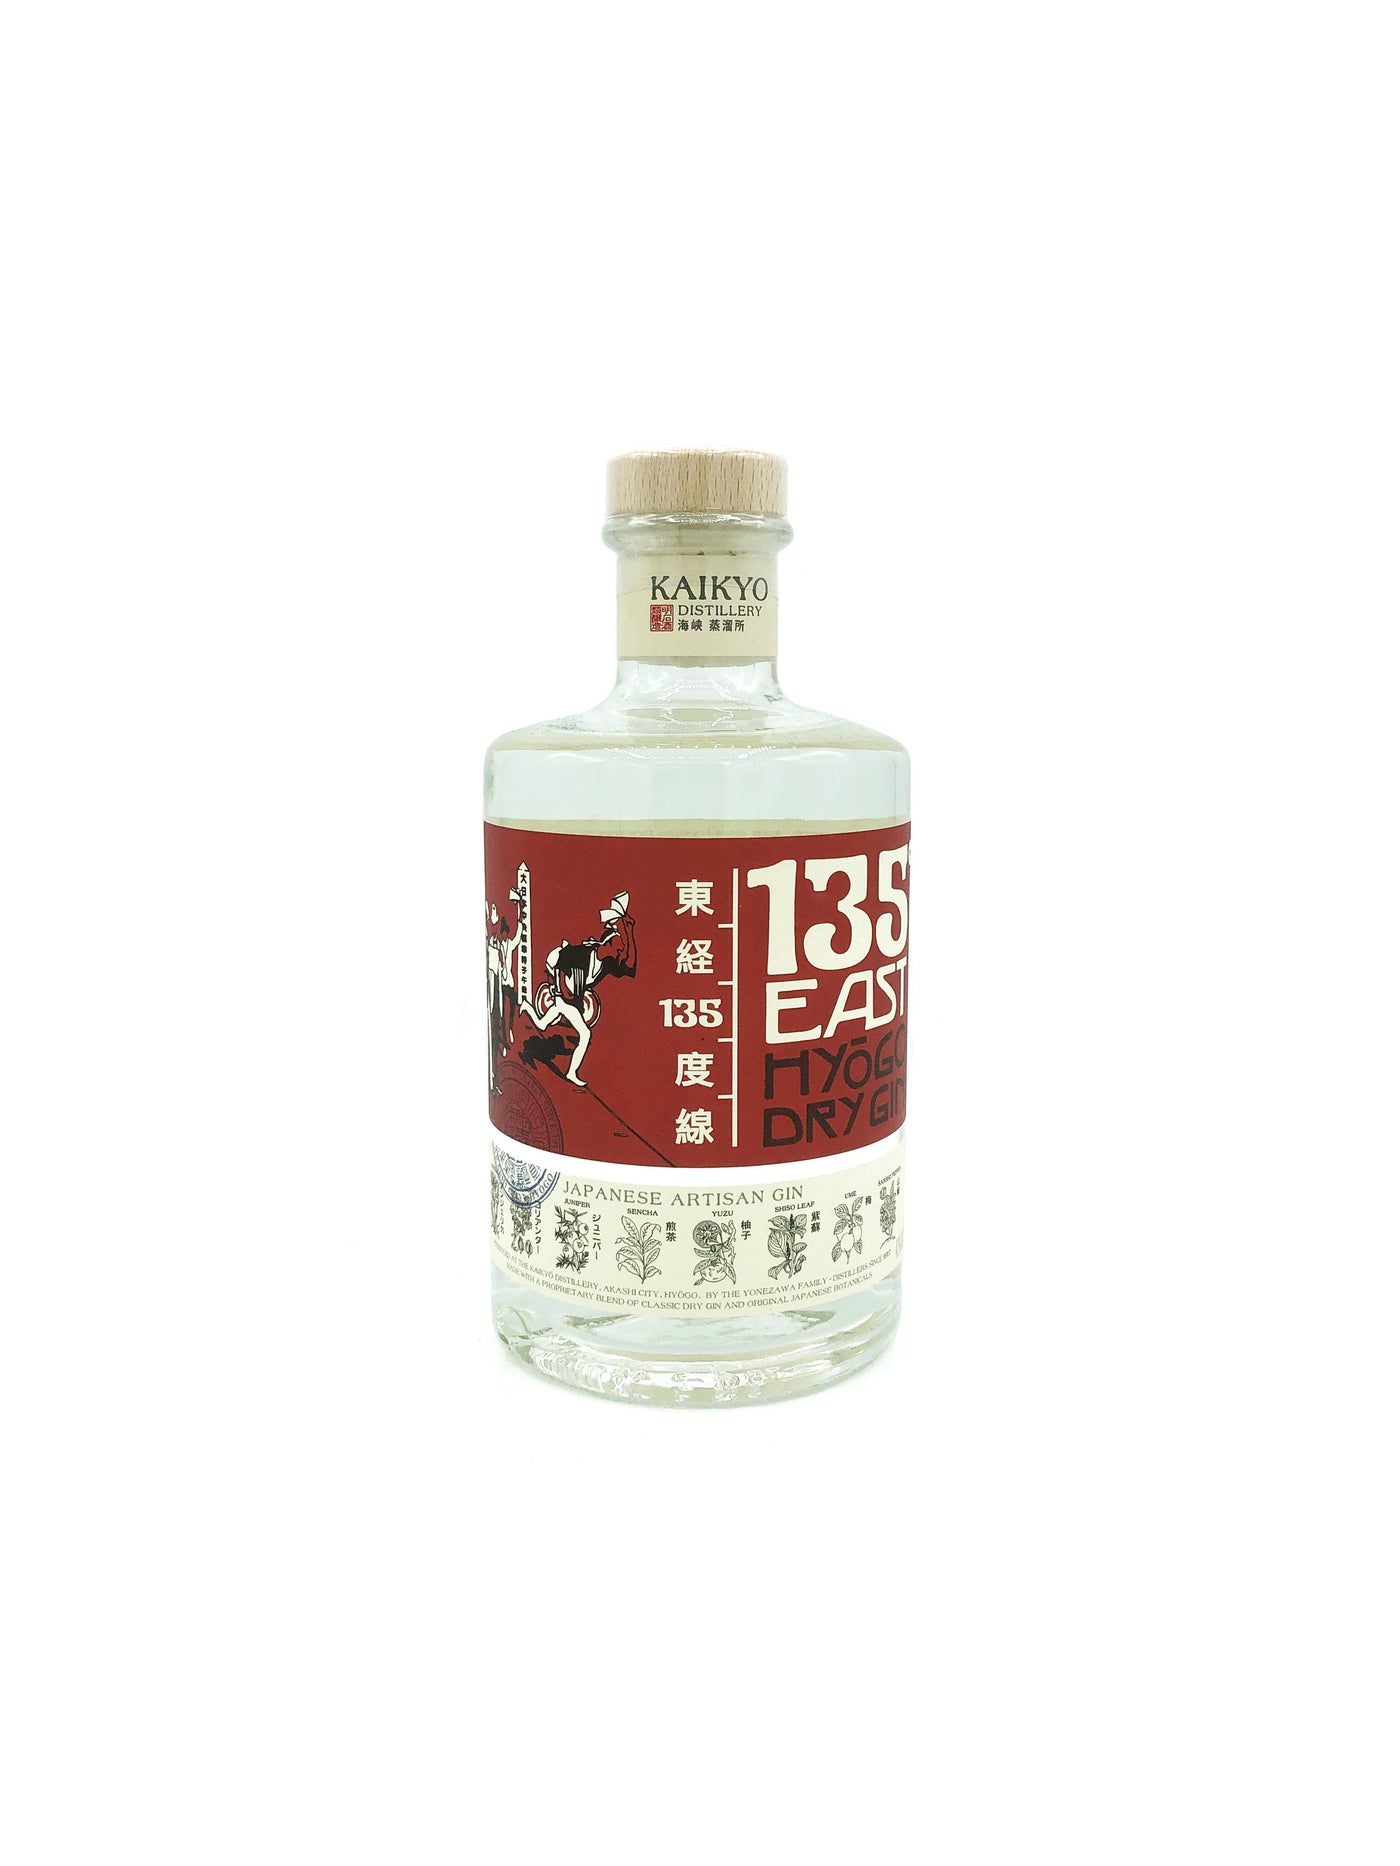 135 East Hyogo Dry Gin 750ml